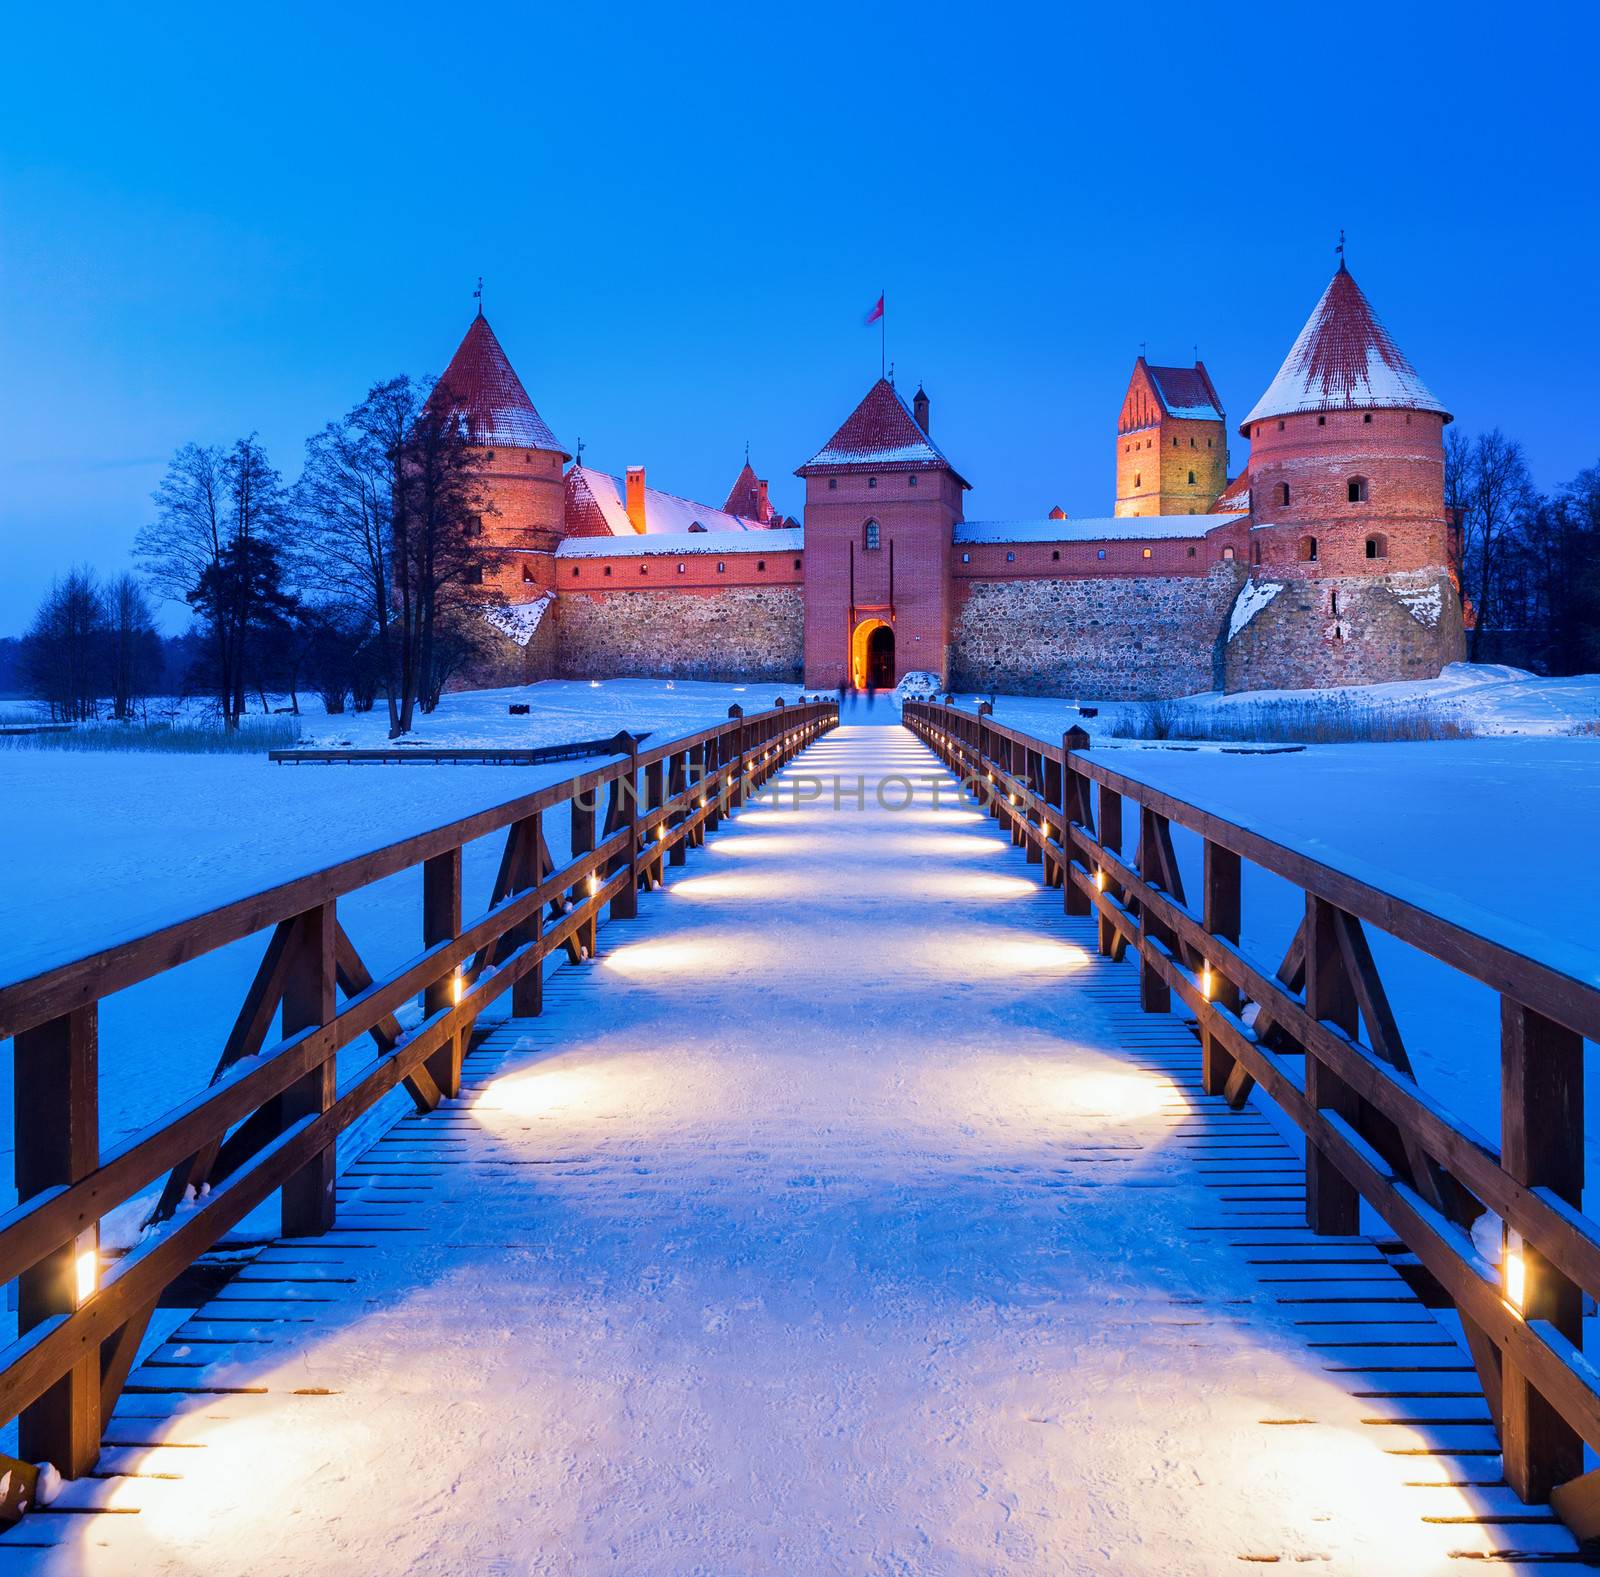 Trakai - historic city and lake resort in Lithuania by vladimir_sklyarov